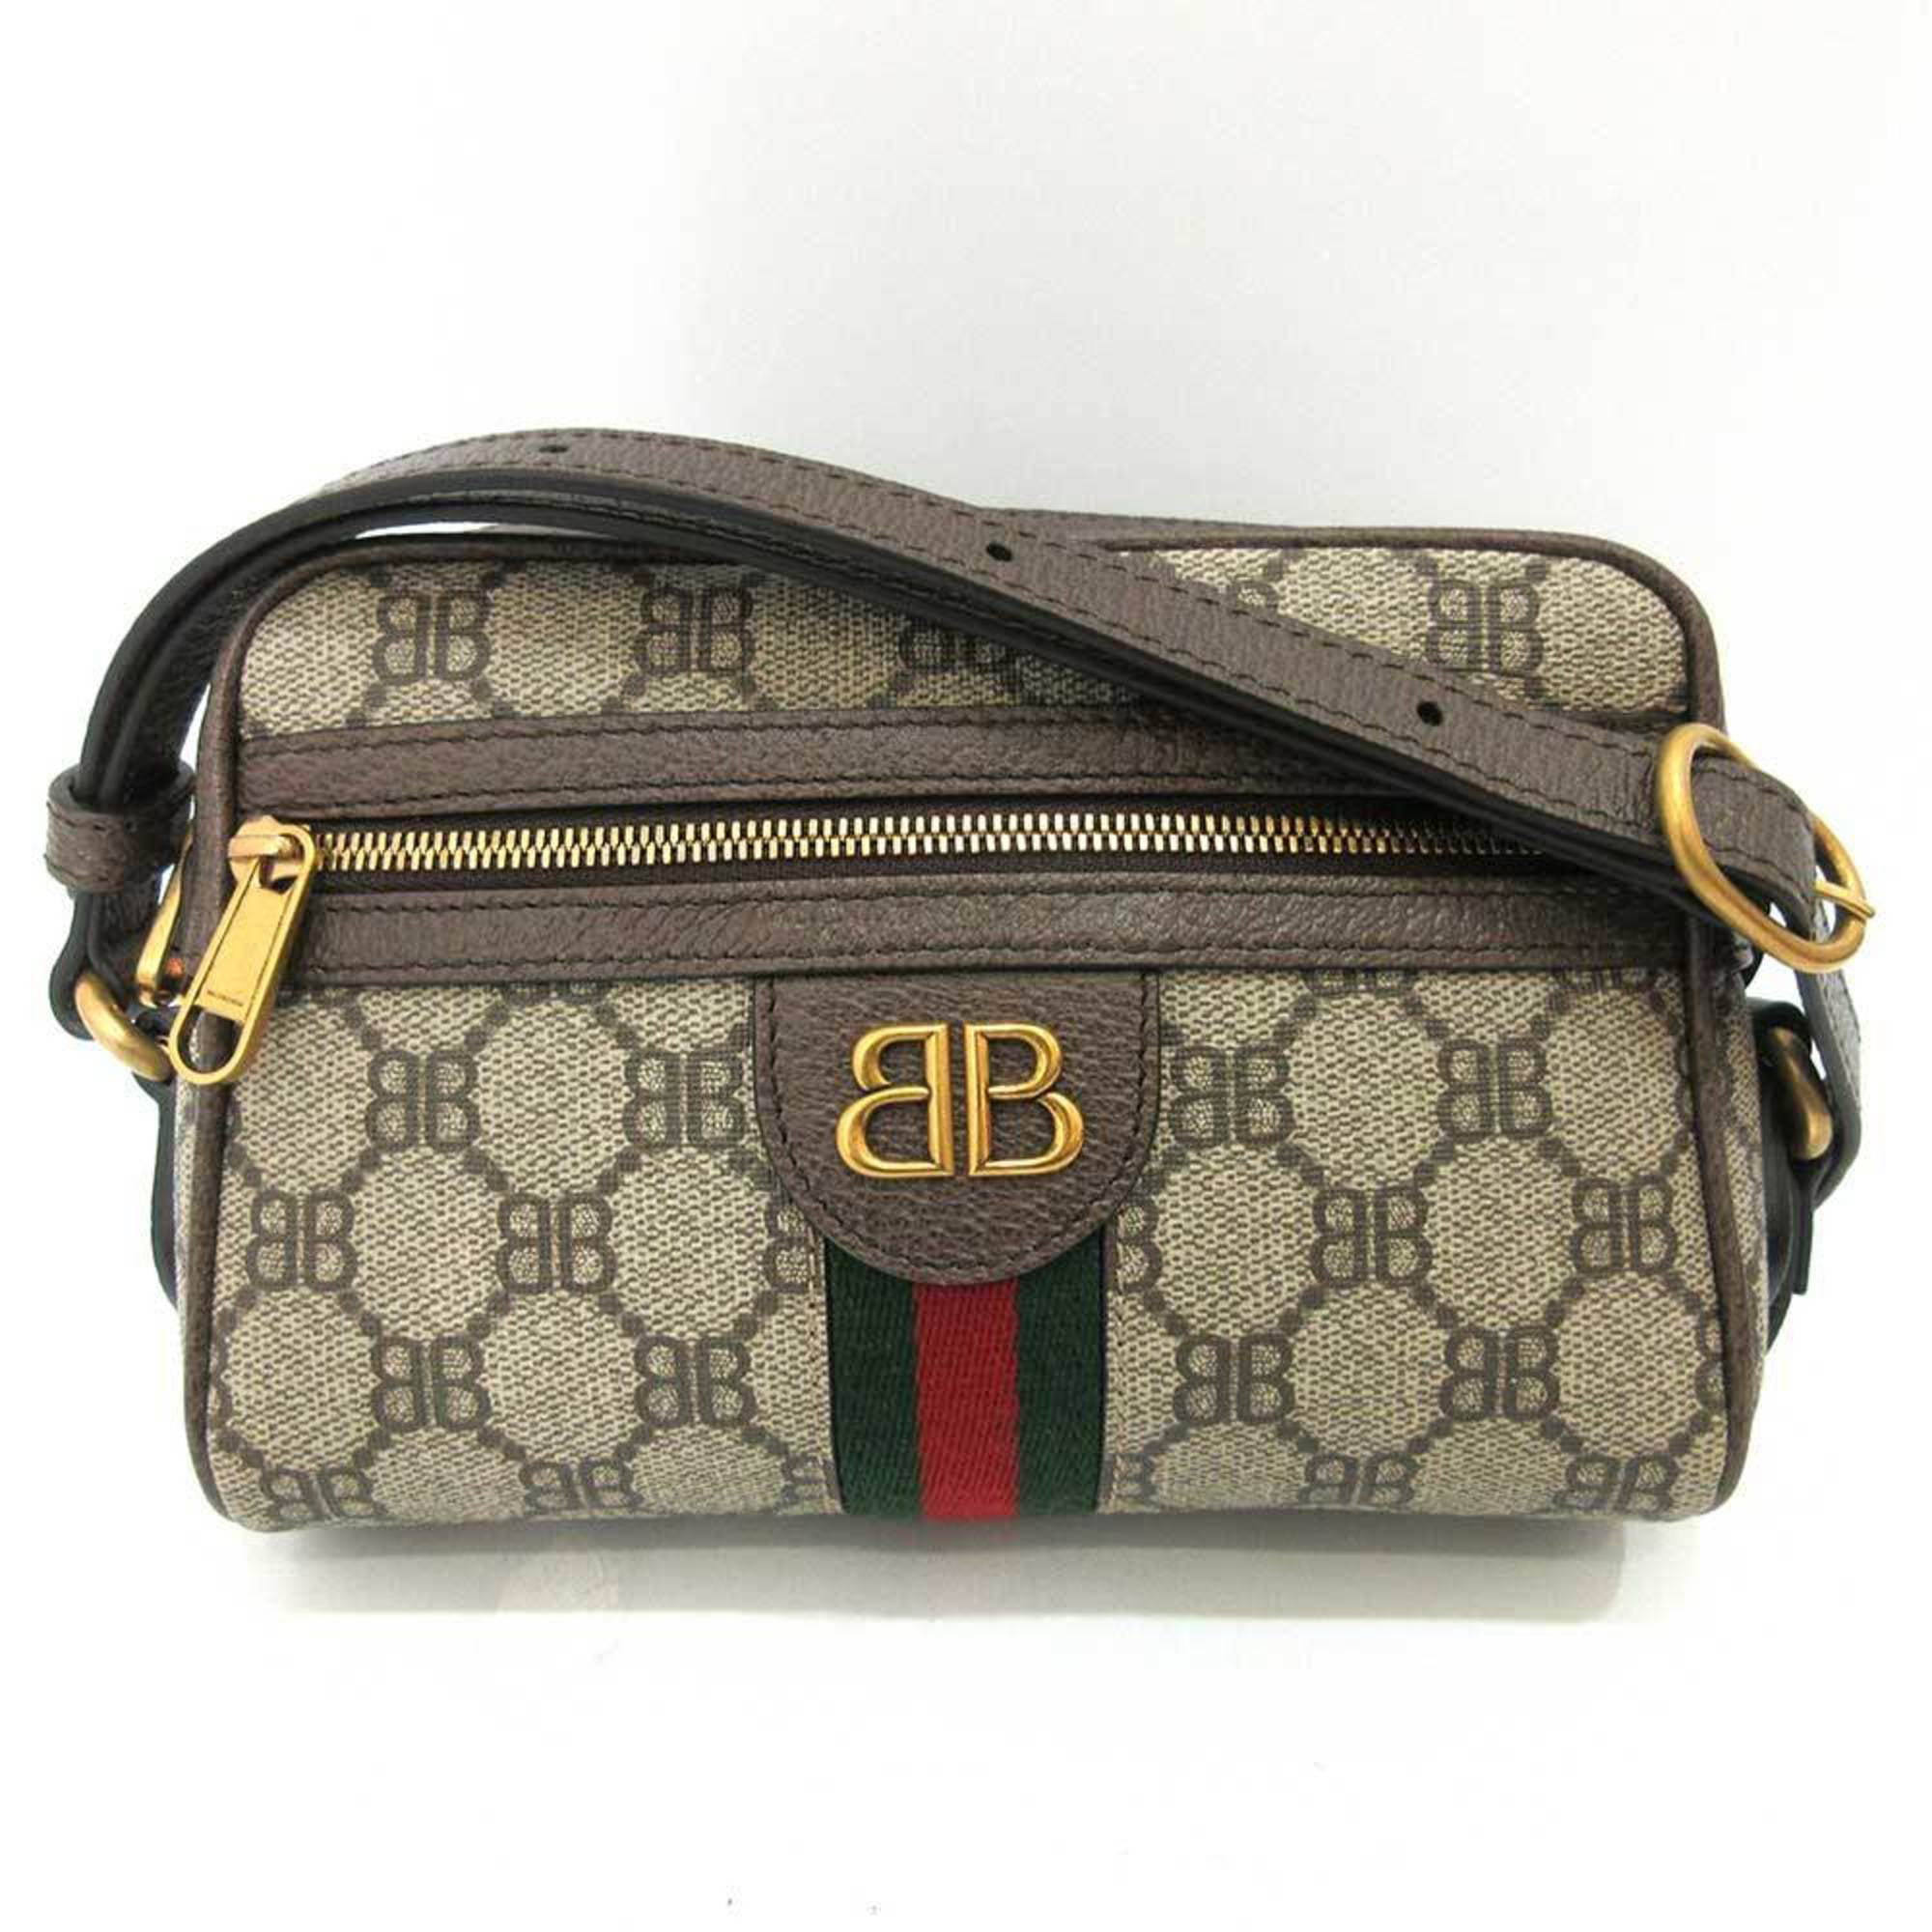 Gucci, Bags, Authentic Vintage Gucci Pochette Brown